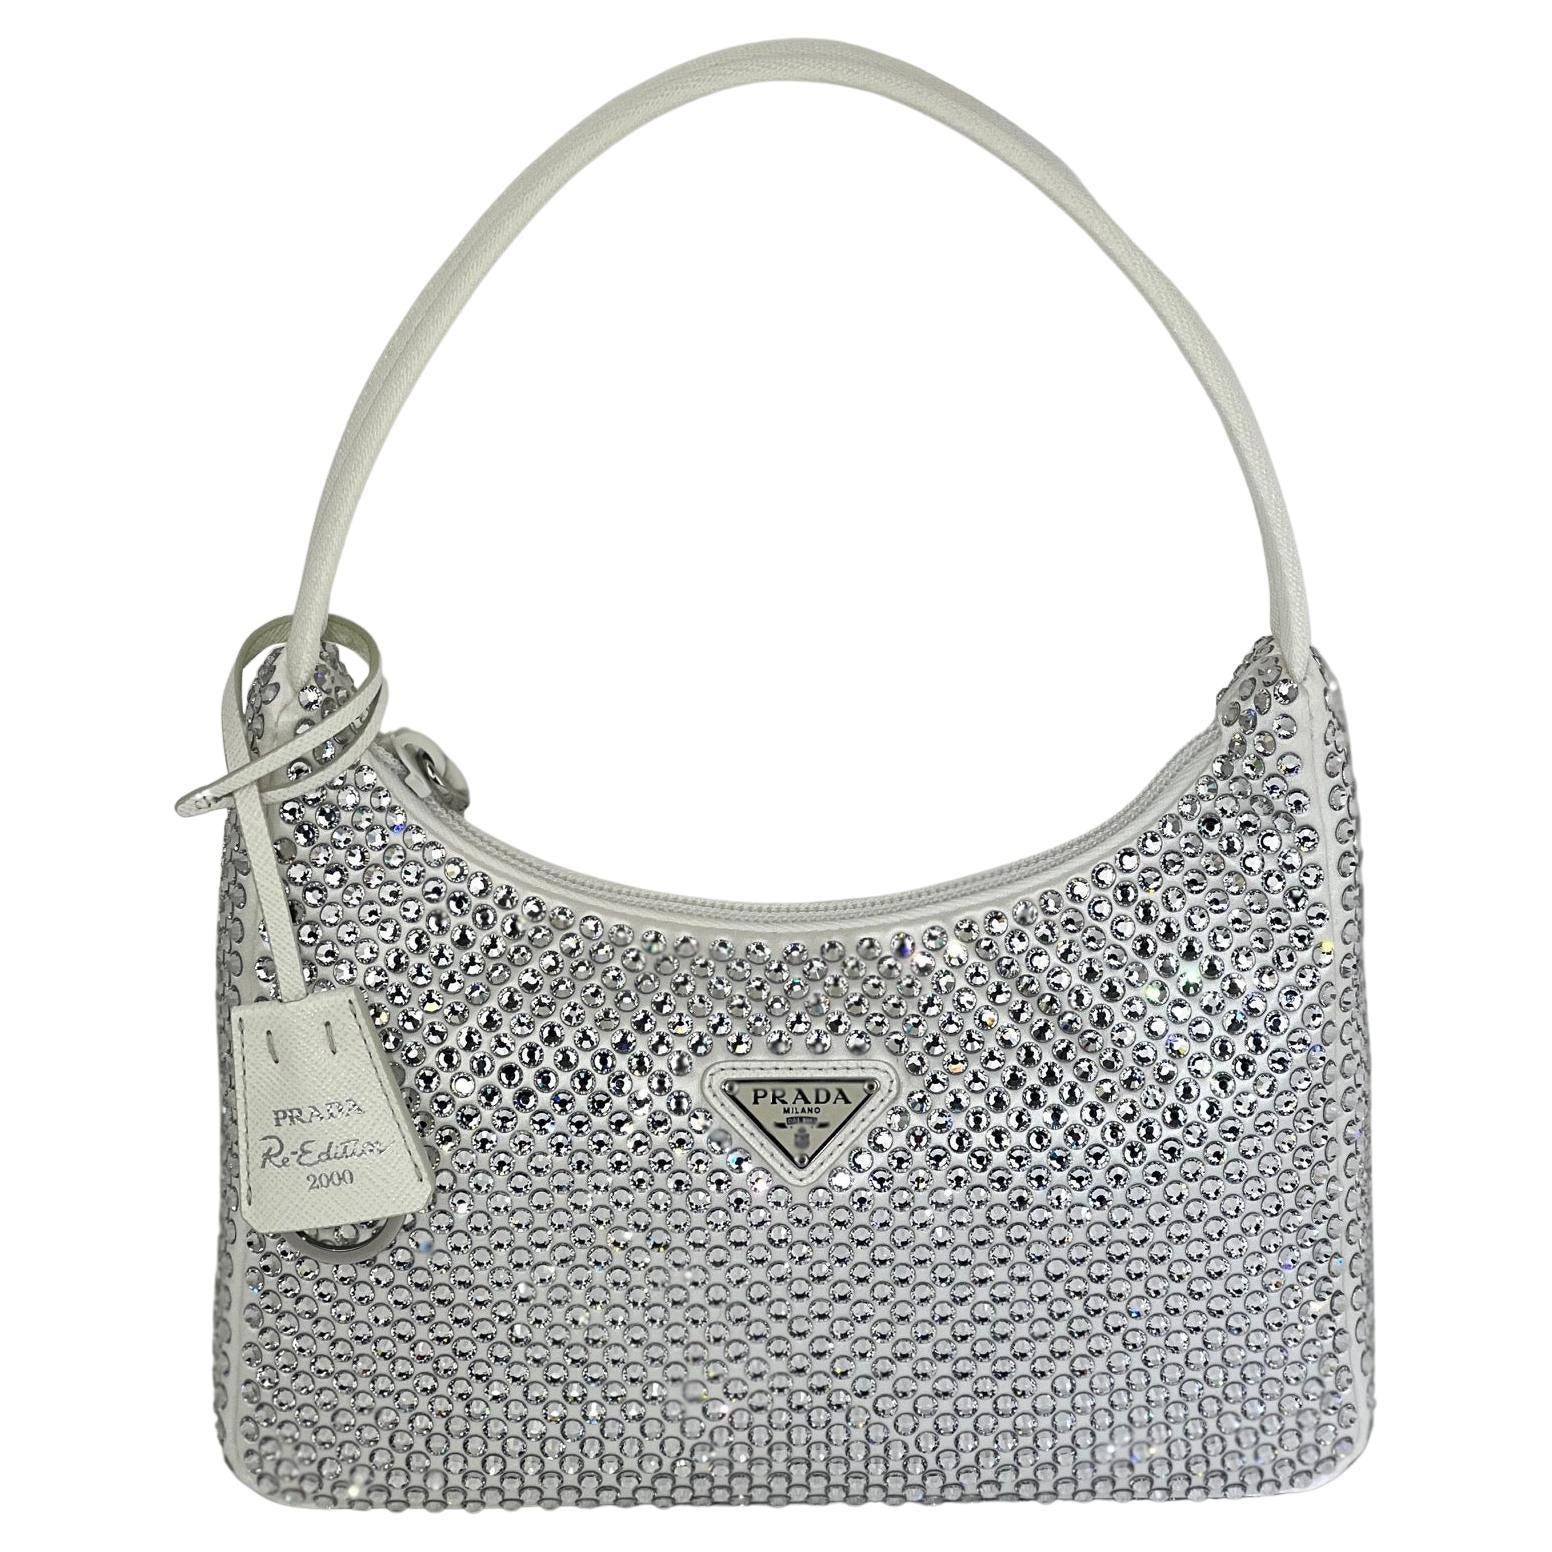 Prada Hand Bag Re Edition 2000 Satin White Mini-Bag with Crystals Bag New